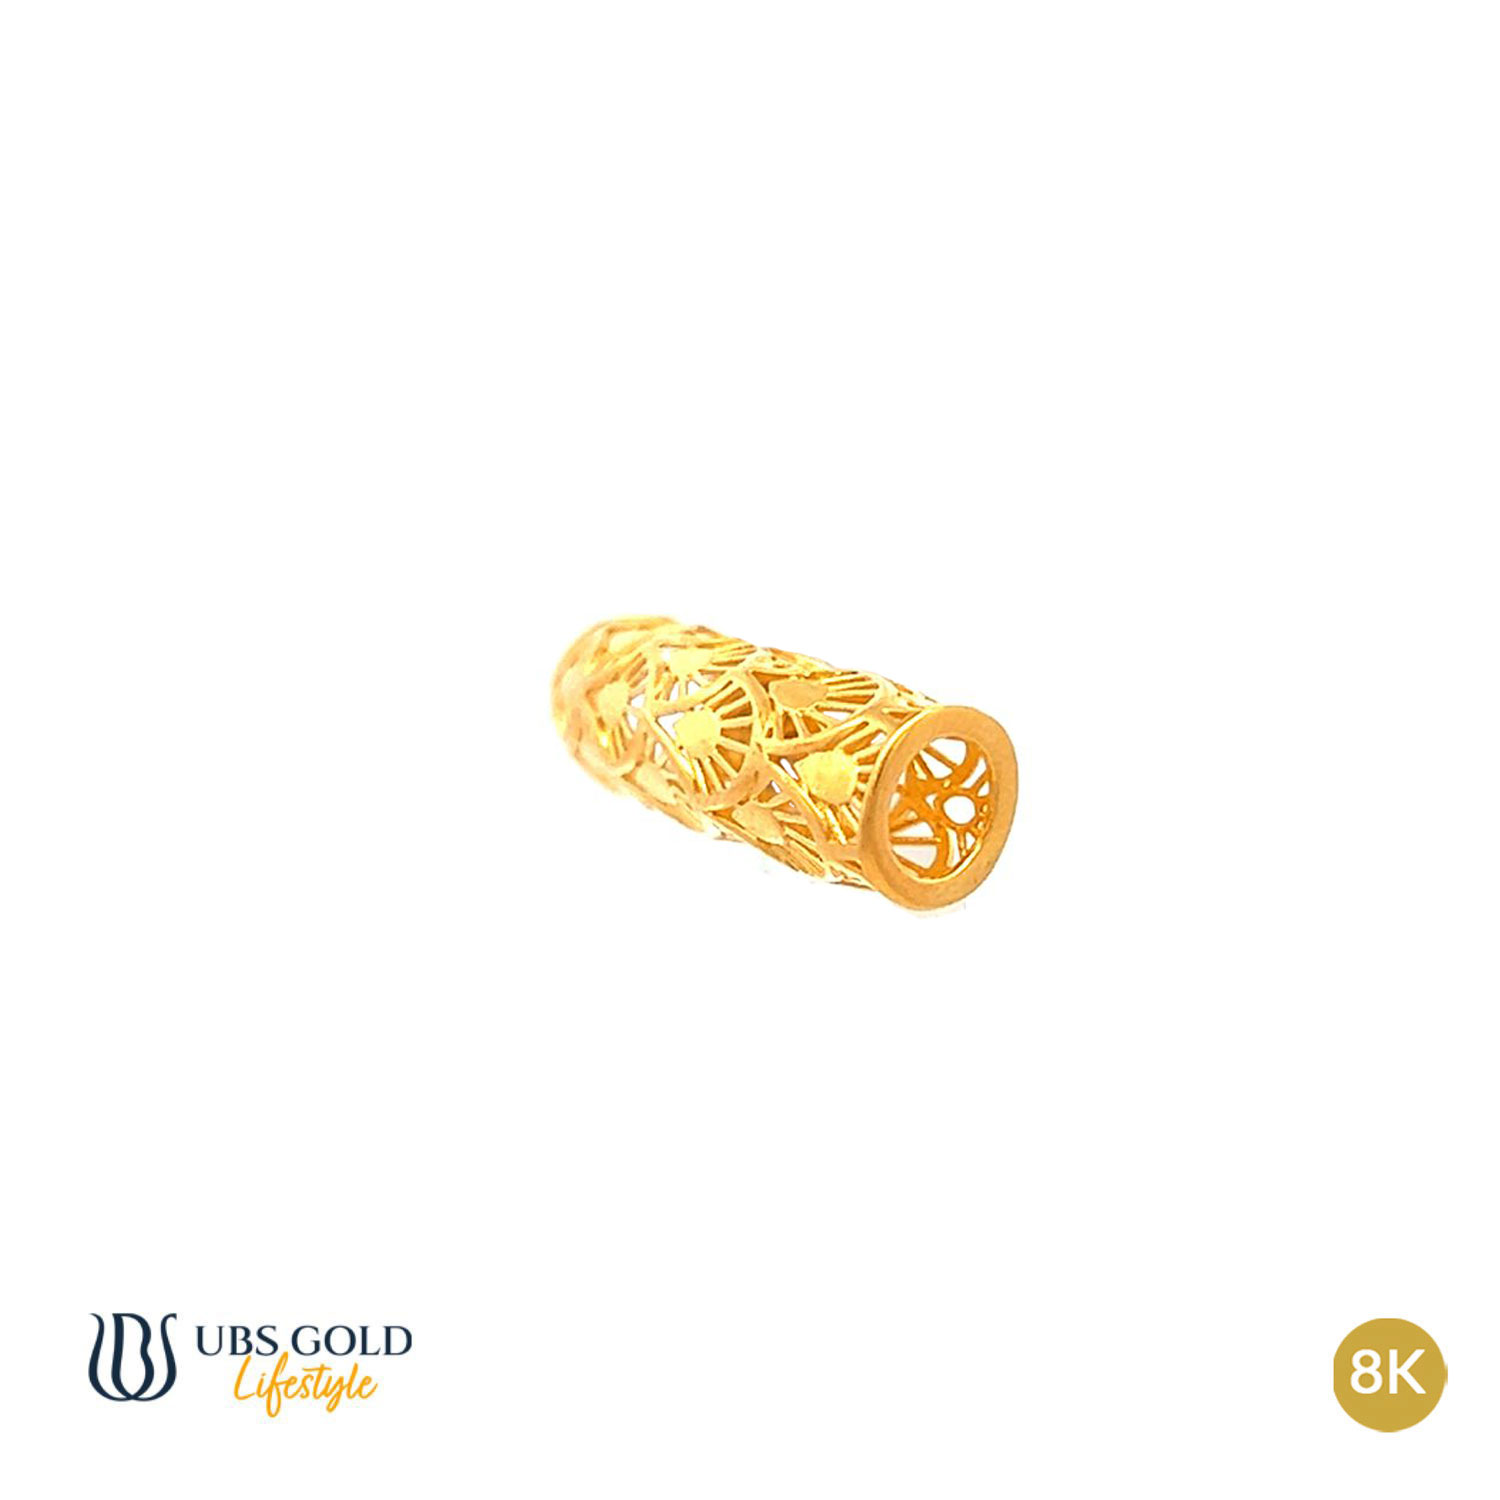 UBS Gold Liontin Emas Sakura - Cdm0189 - 8K